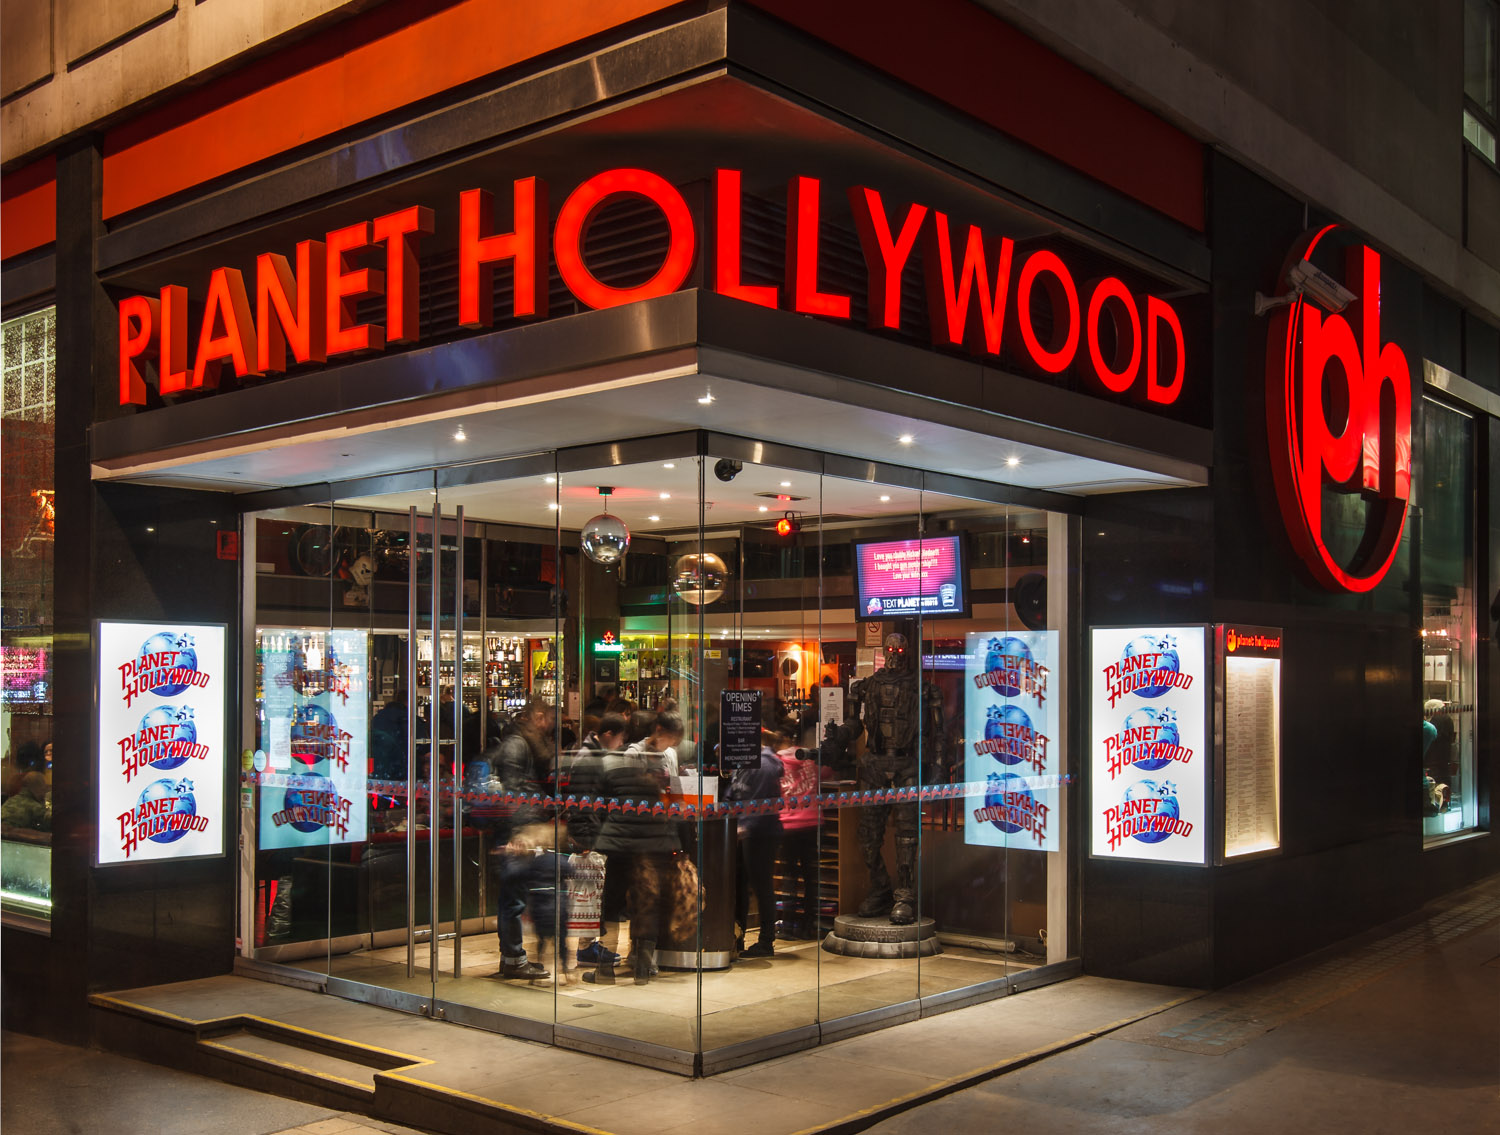 London Restaurant Planet Hollywood